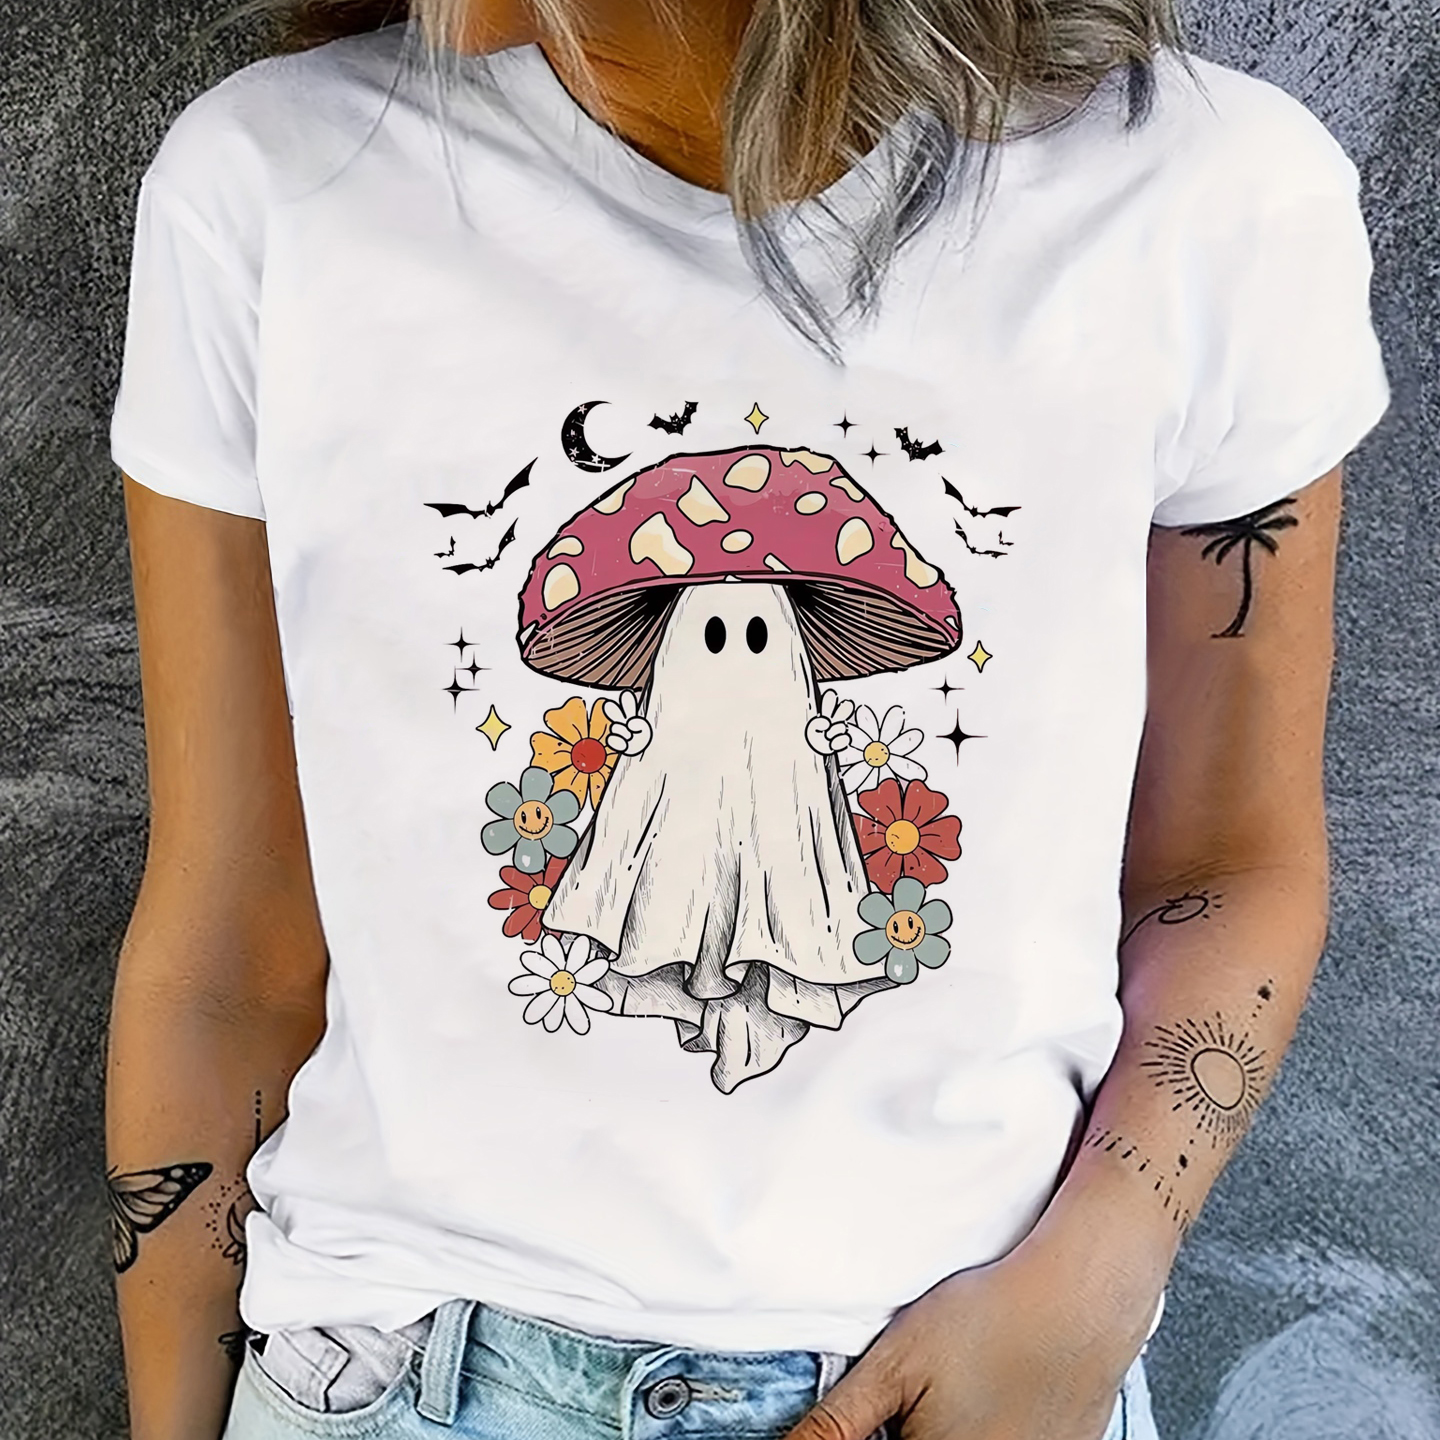 

Ghost Mushroom Print T-shirt, Casual Crew Neck Short Sleeve Summer Top, Women's Clothing